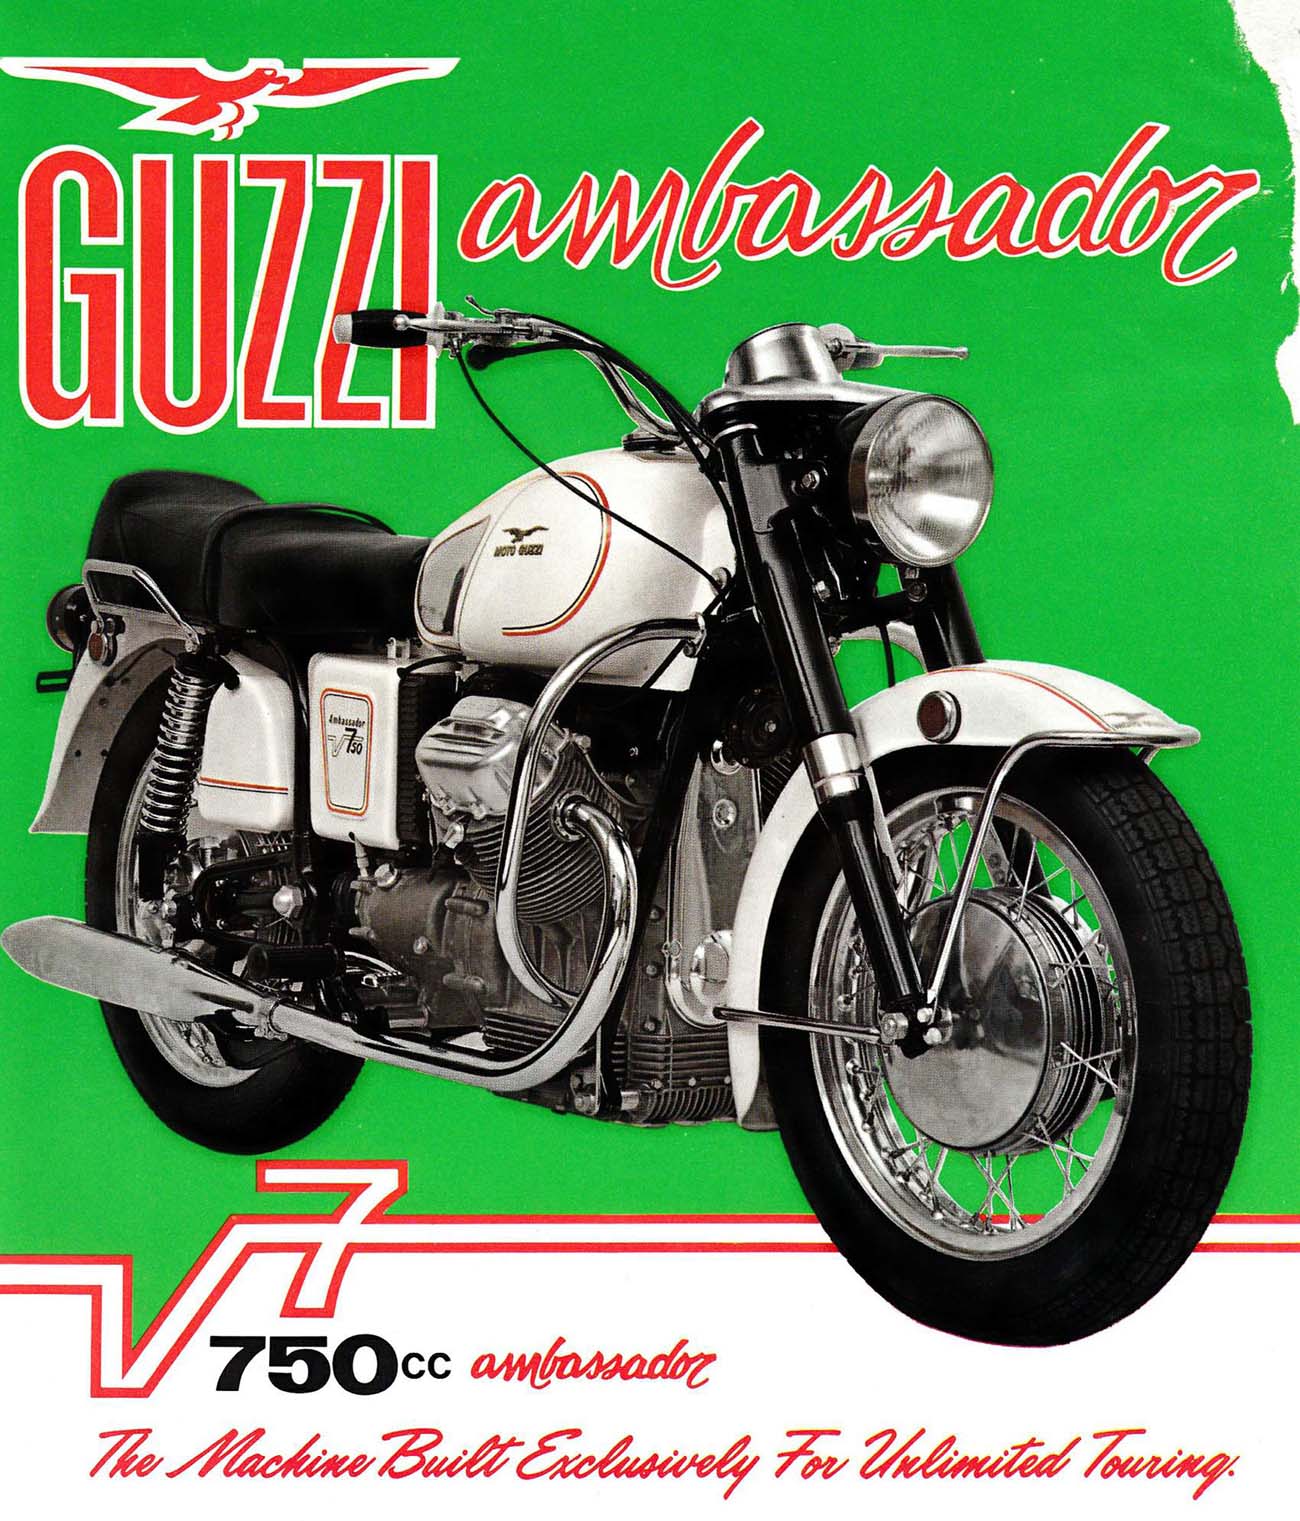 Moto Guzzi V-7 750 Ambassador technical specifications